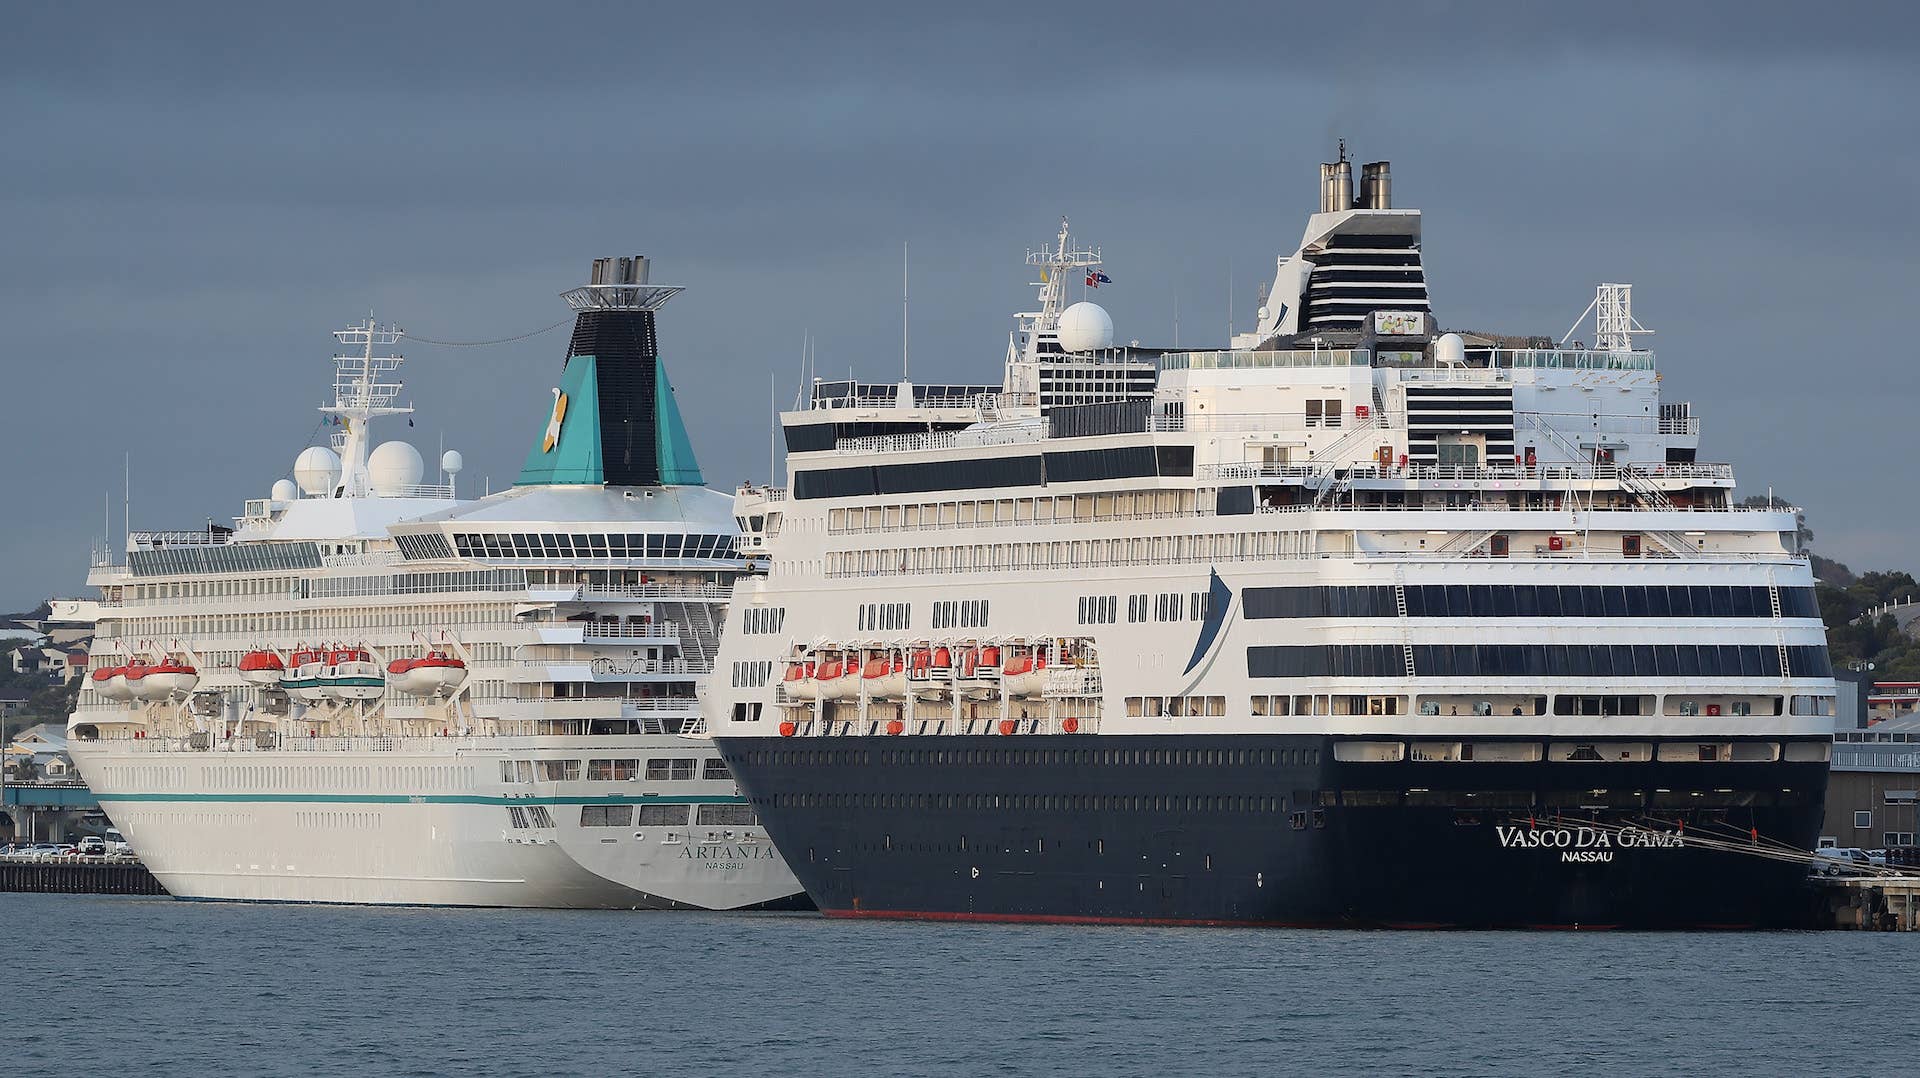 The Artania and Vasco Da Gama cruise ships